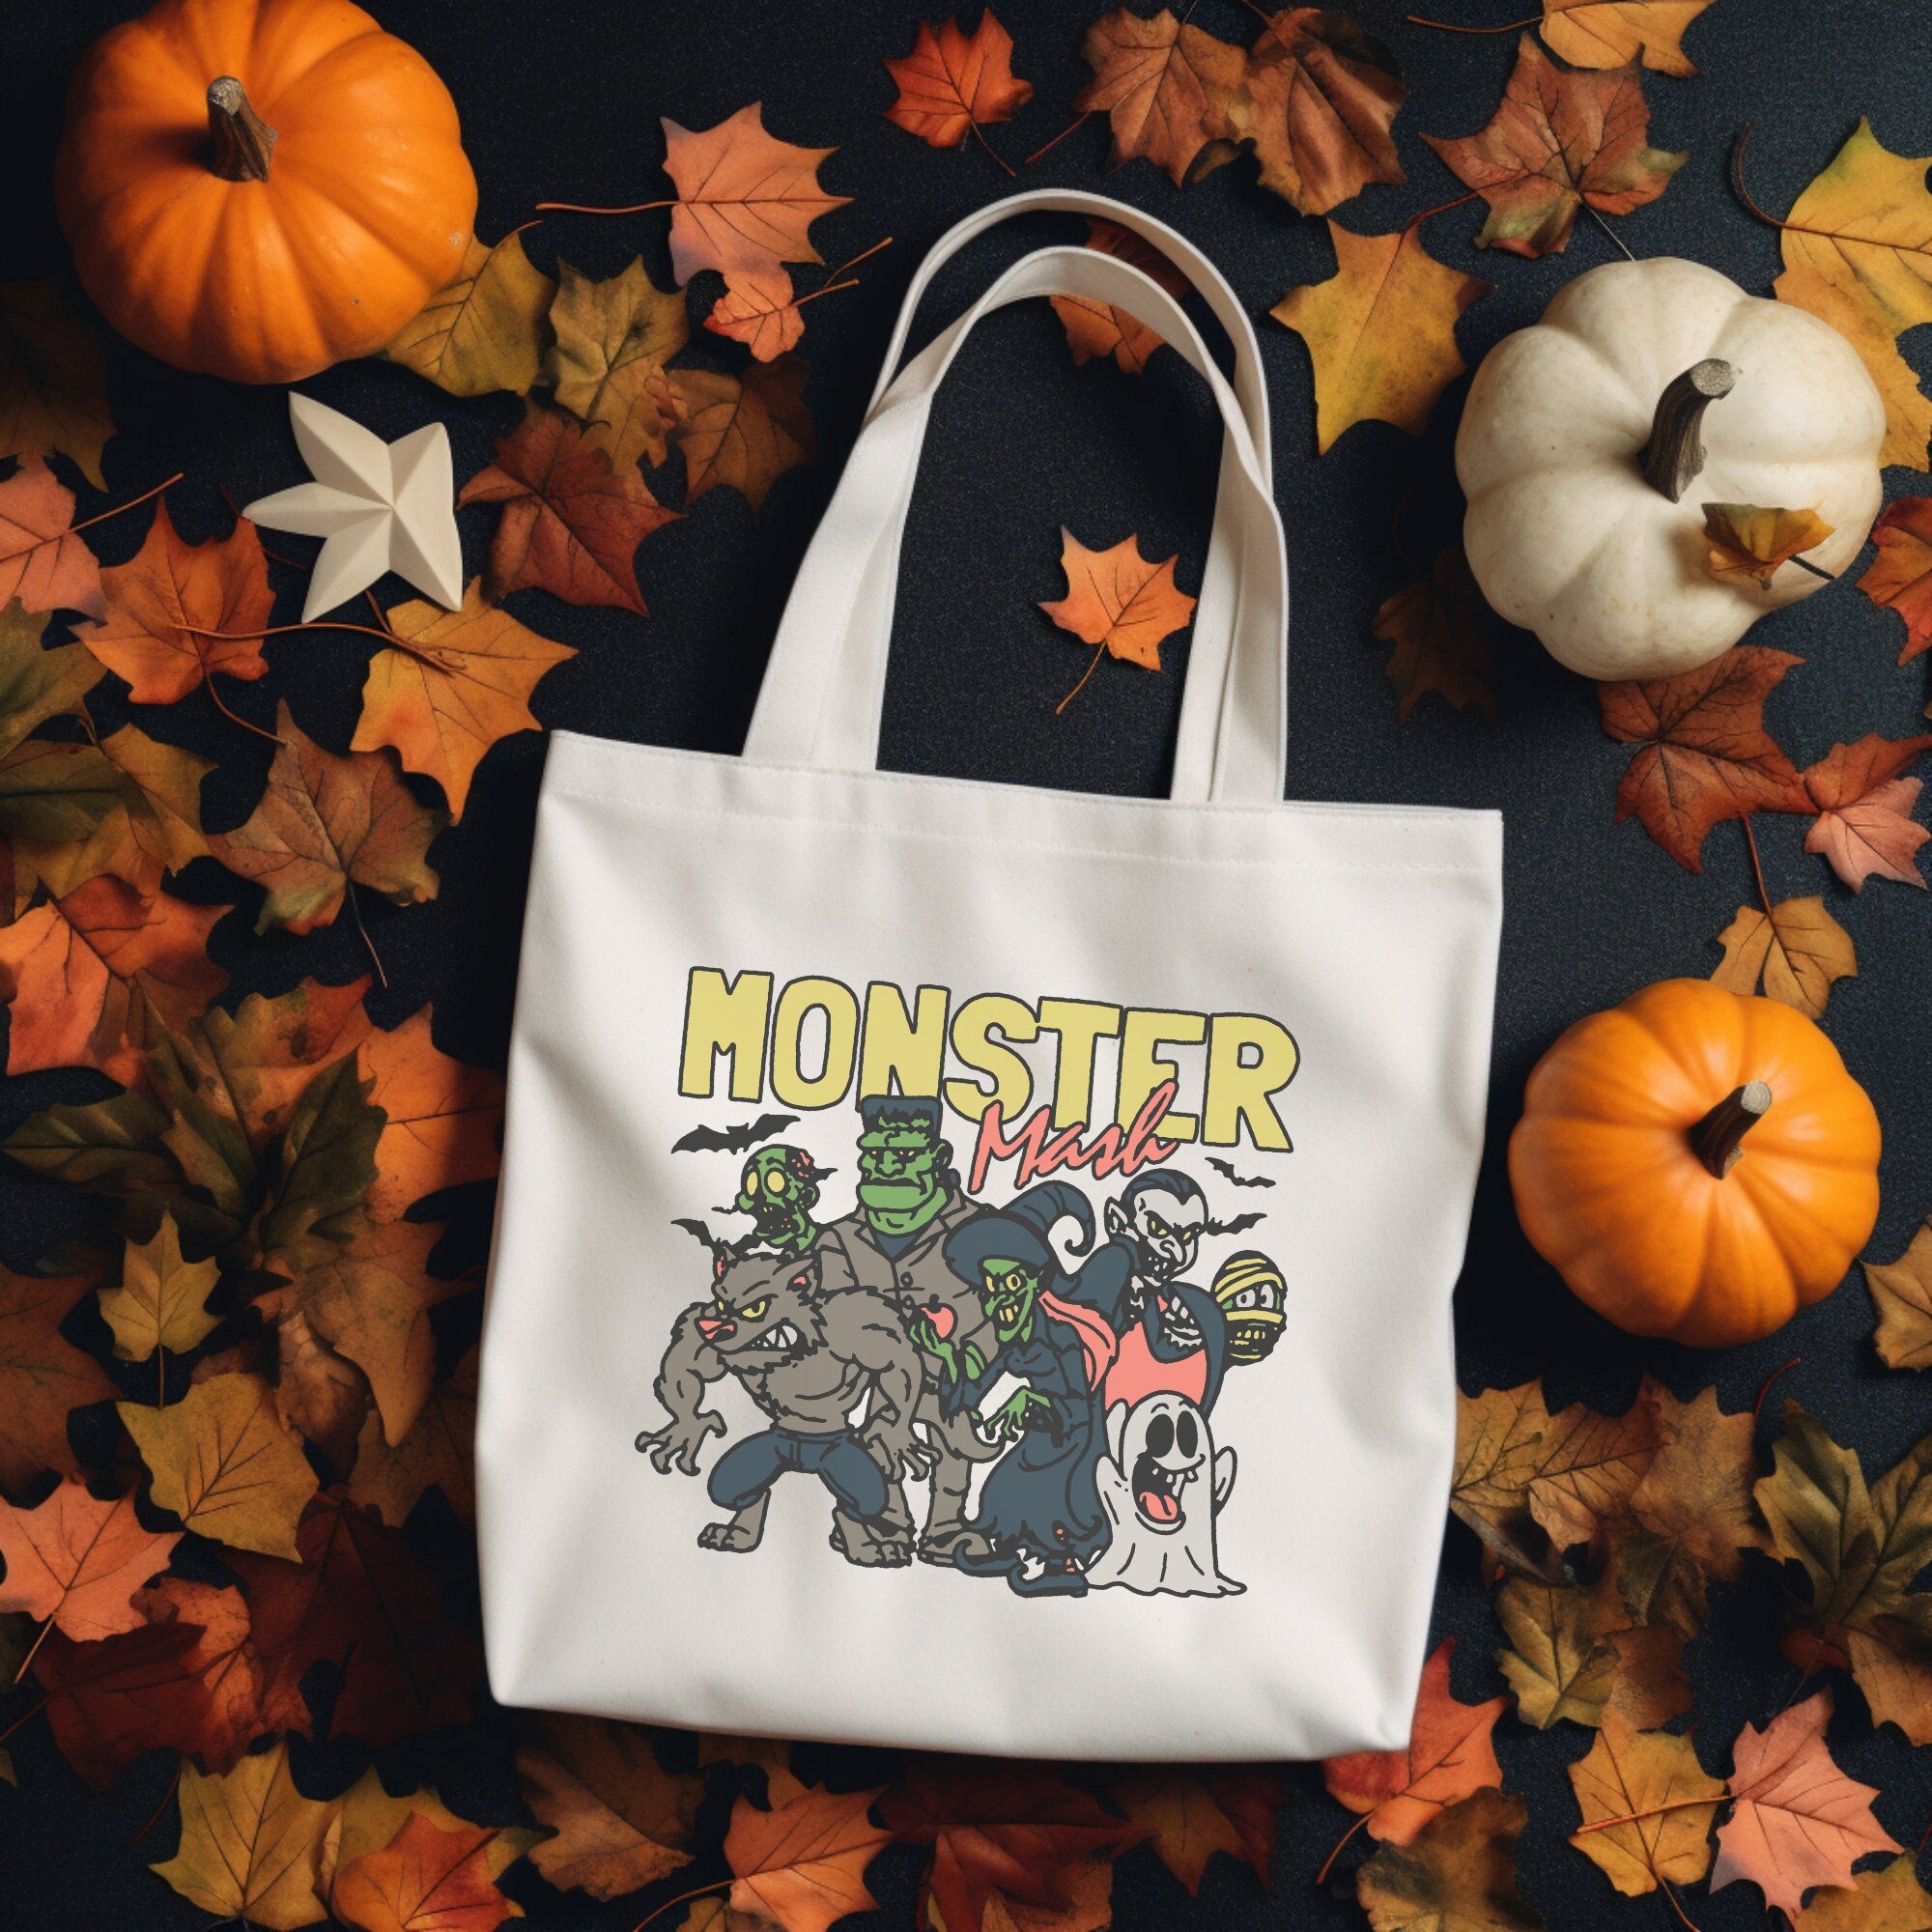 Retro Halloween Tote Bag, Monster Mash Tote Bag, Vintage Retro trick or treat Tote Bag, Retro Monster Halloween Gift for Her, Him, Friend